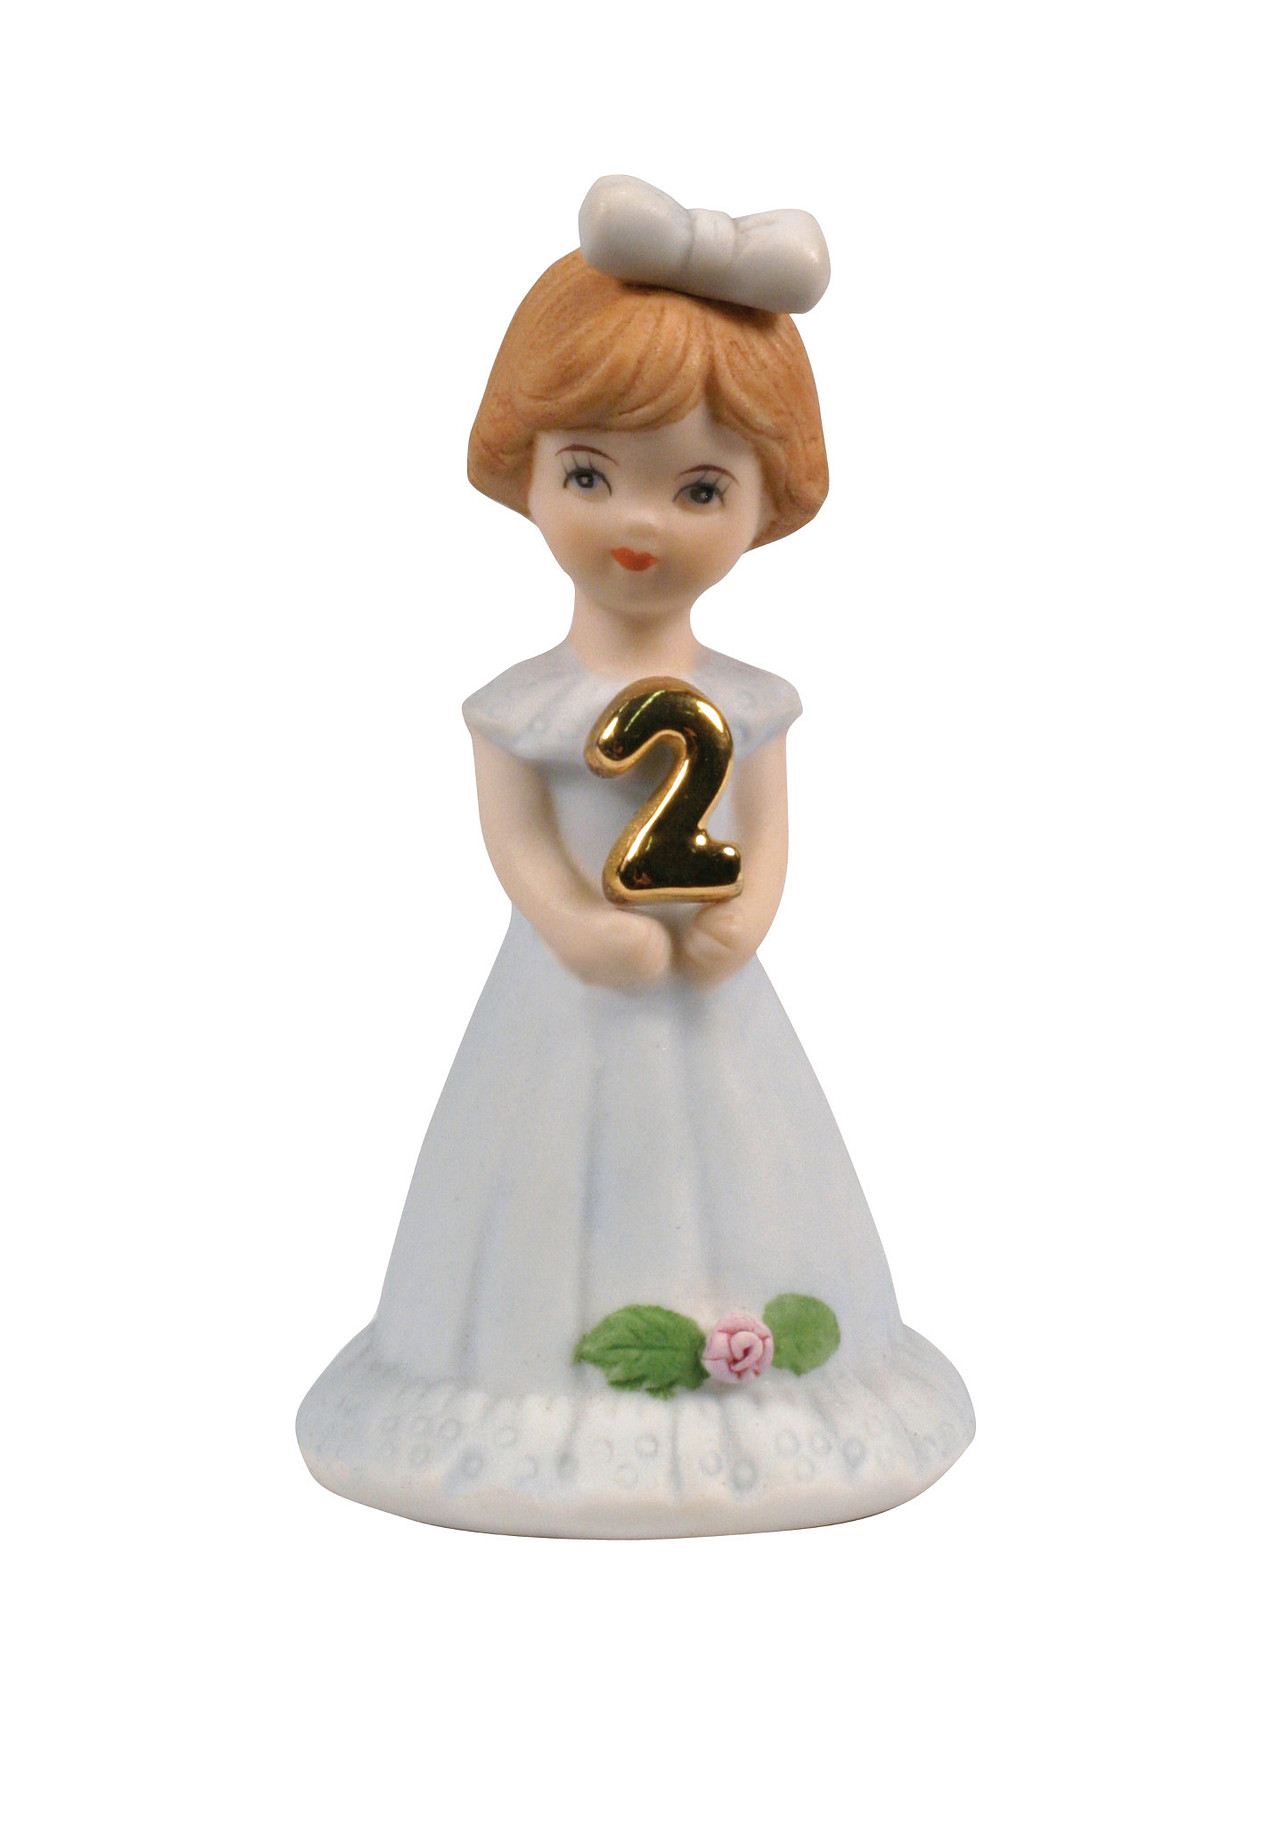 Growing Up Birthday Girls Brunette Age 2 Porcelain Bisque Figurine Q-GL648 - image 3 of 5